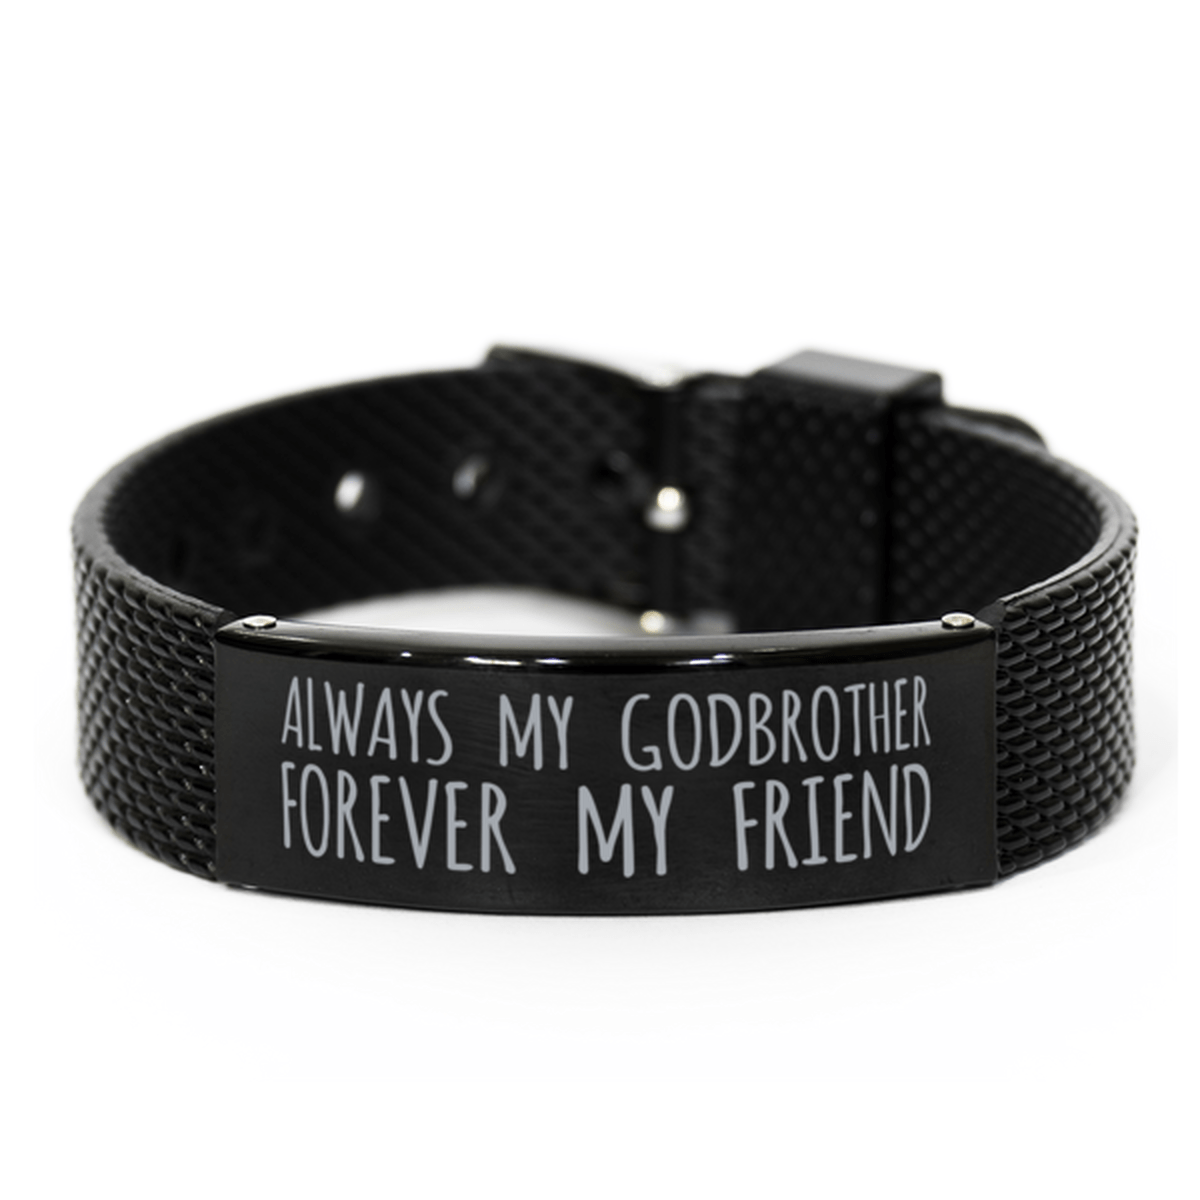 Inspirational Godbrother Black Shark Mesh Bracelet, Always My Godbrother Forever My Friend, Best Birthday Gifts for Family Friends